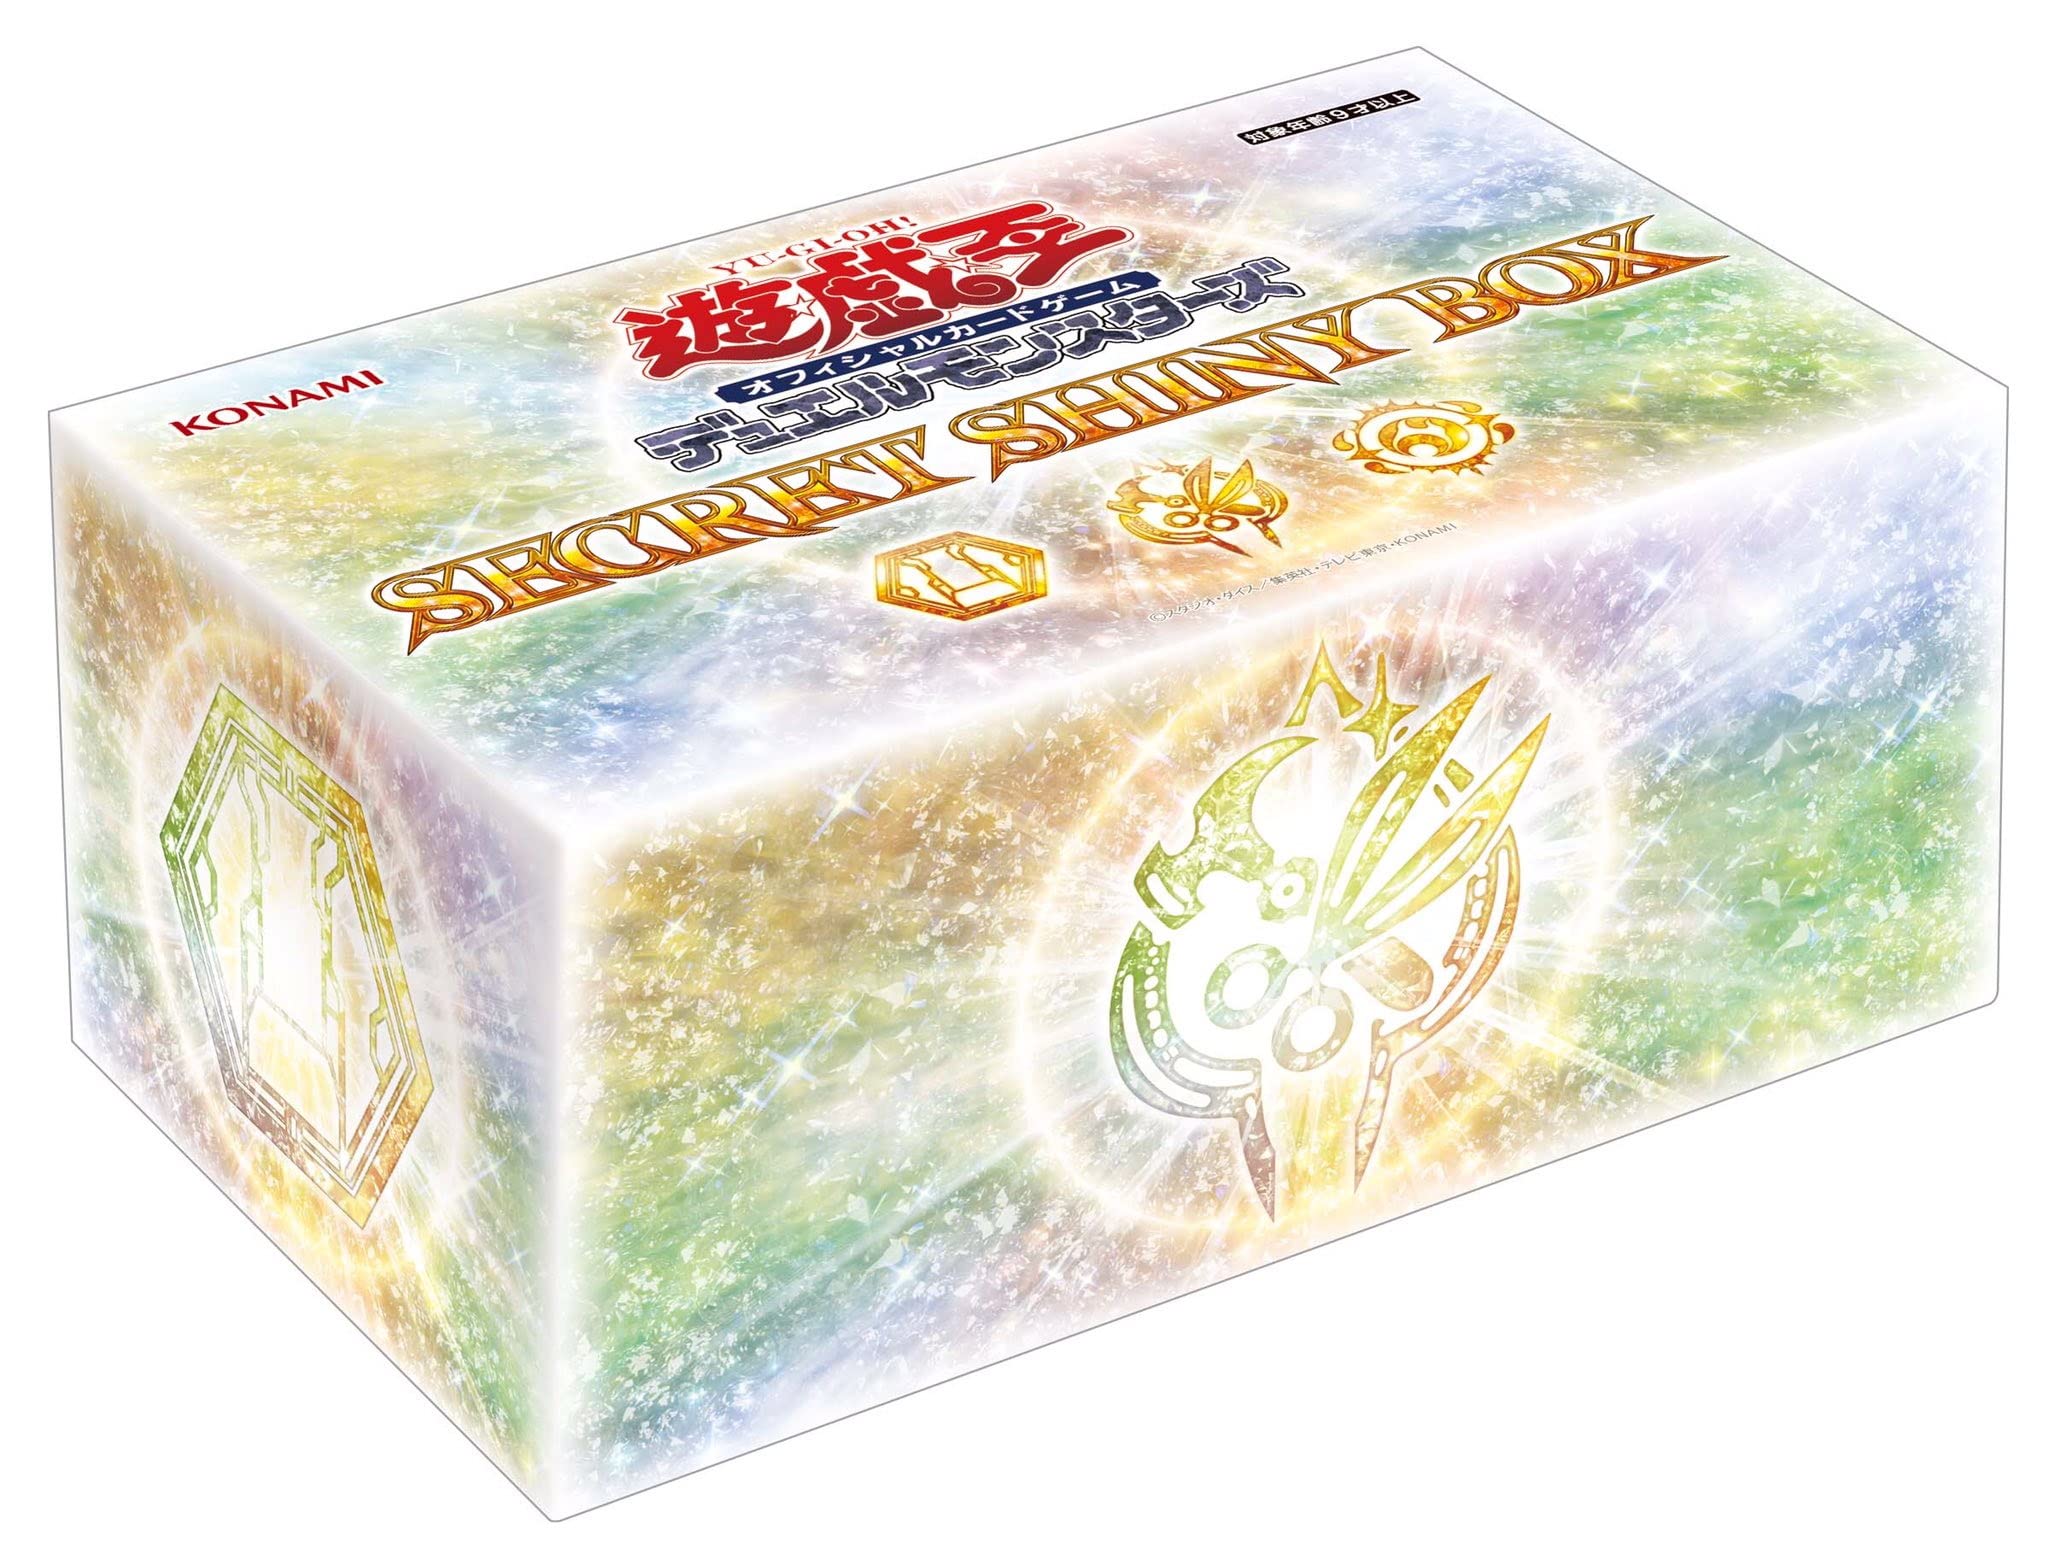 Yu-Gi-Oh! Original Card Game: Duel Monsters Secret Shiny Box